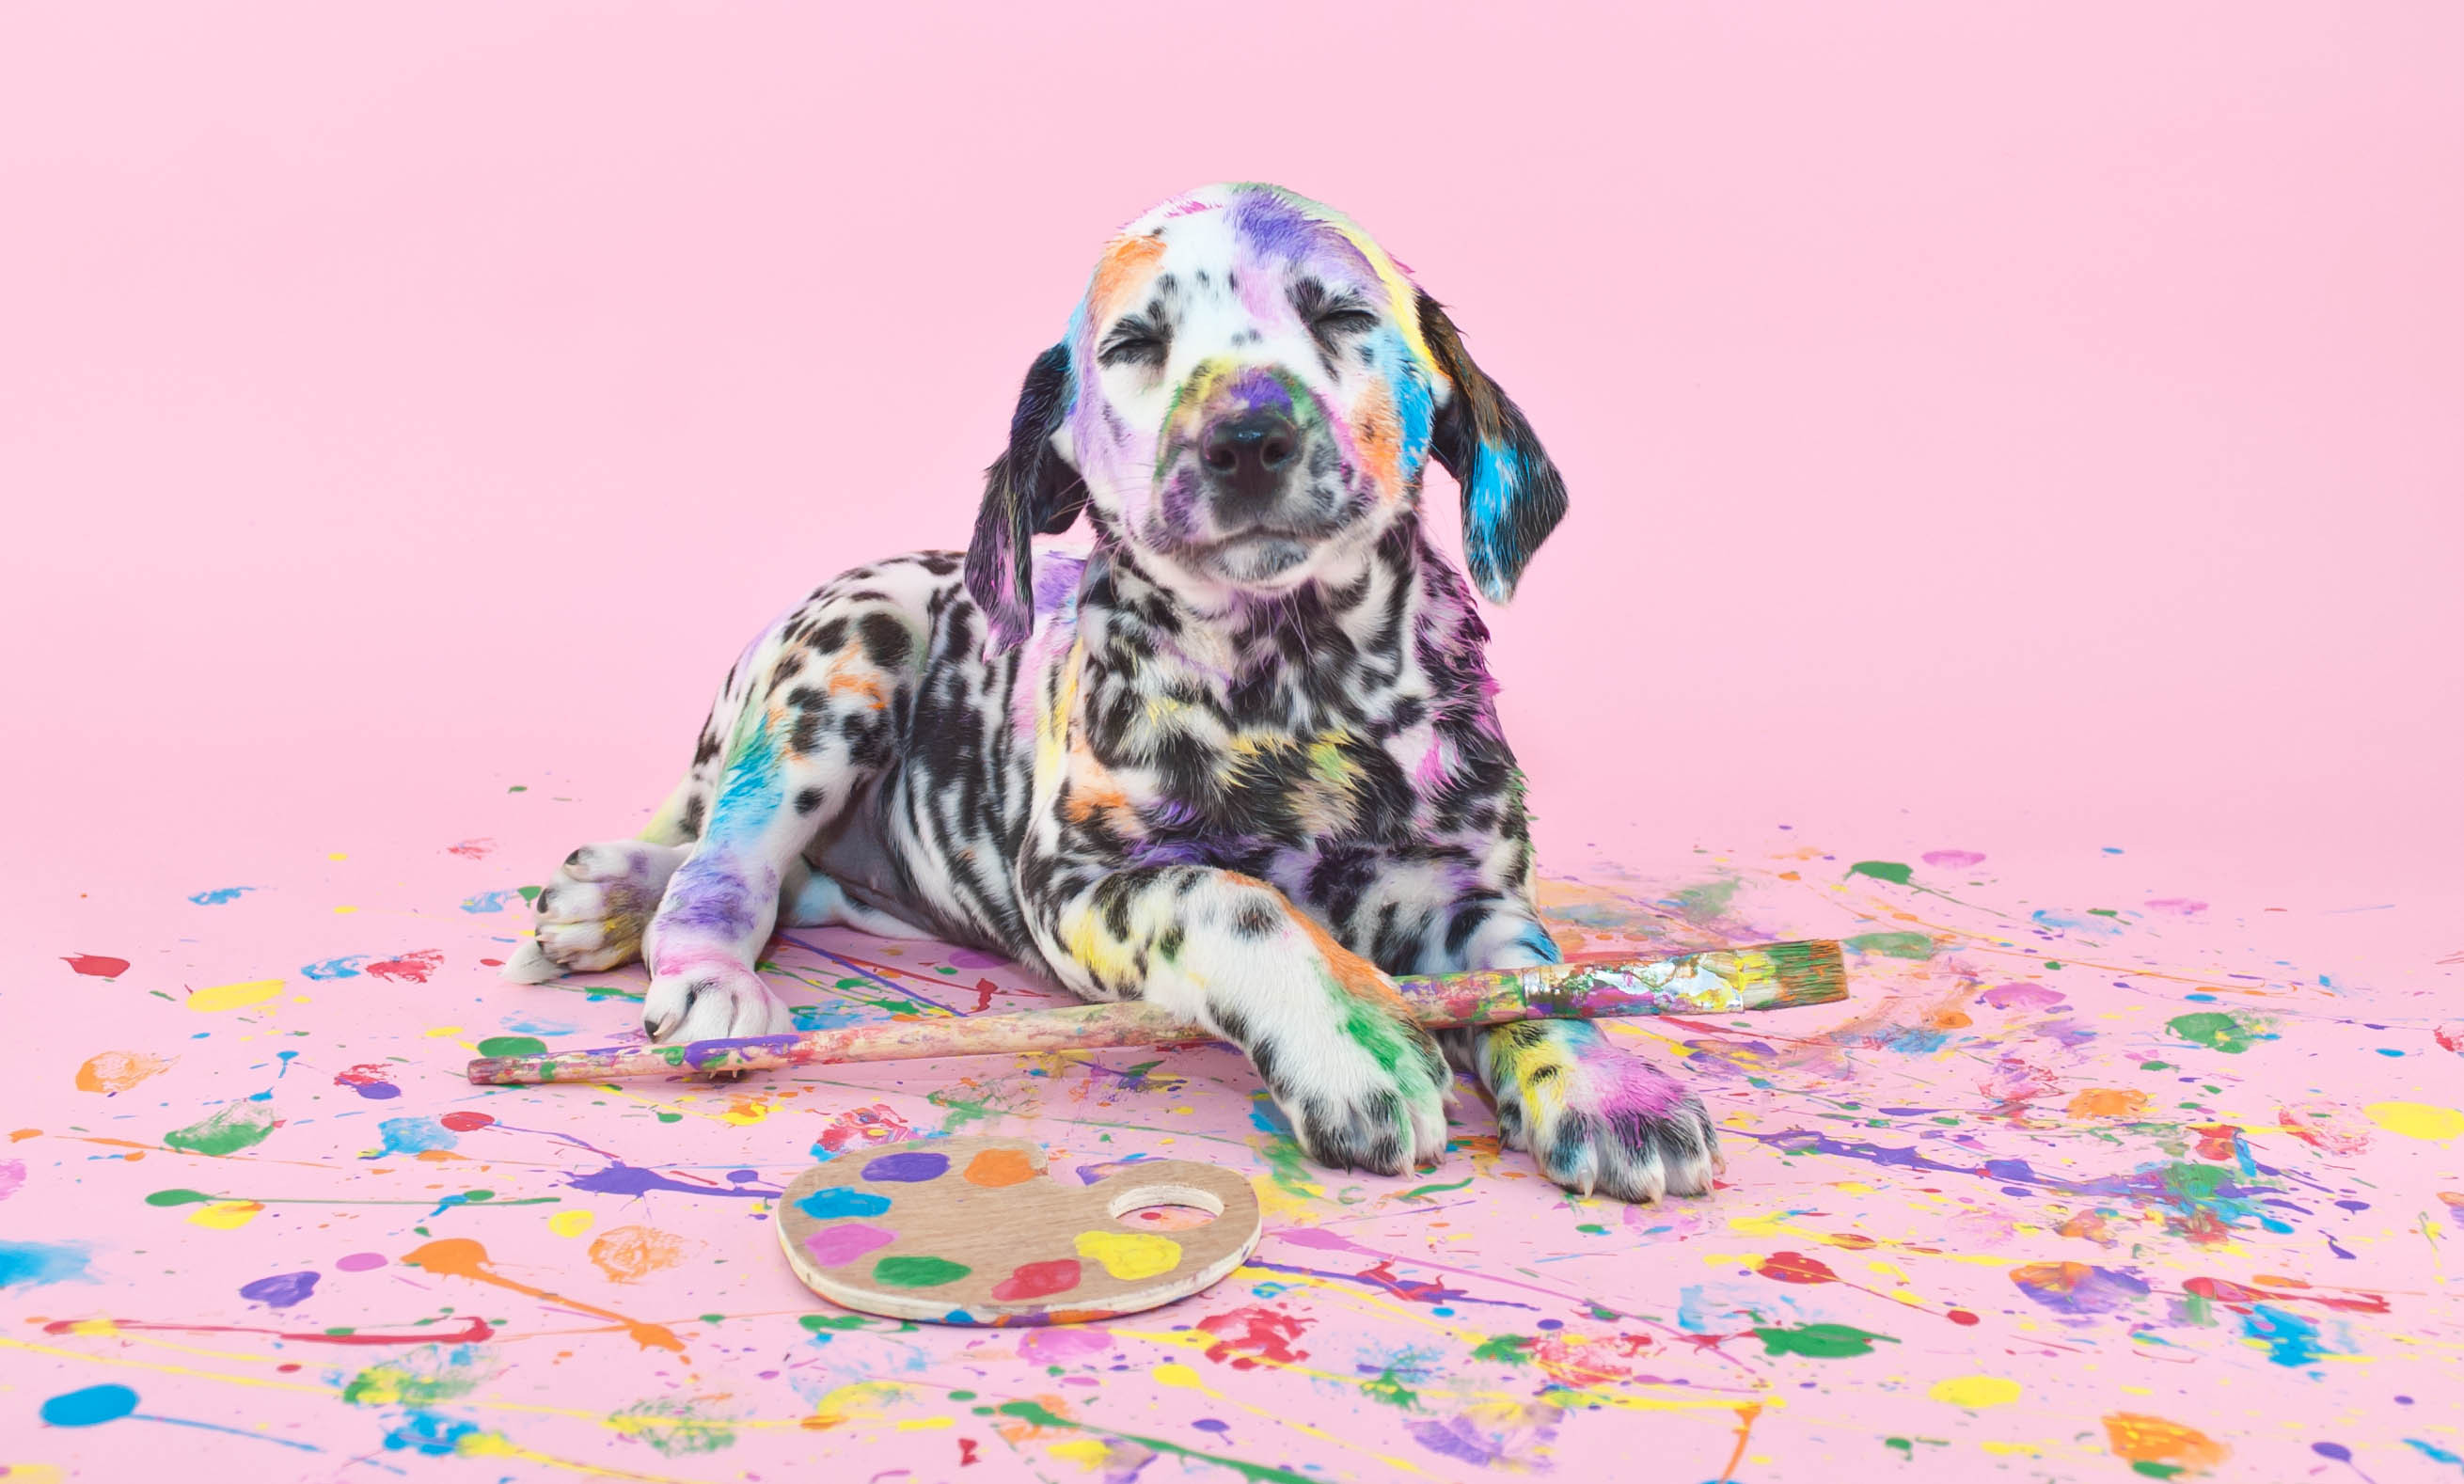 Baby Animal Dalmatian Dog Paint Pet Puppy 2620x1578